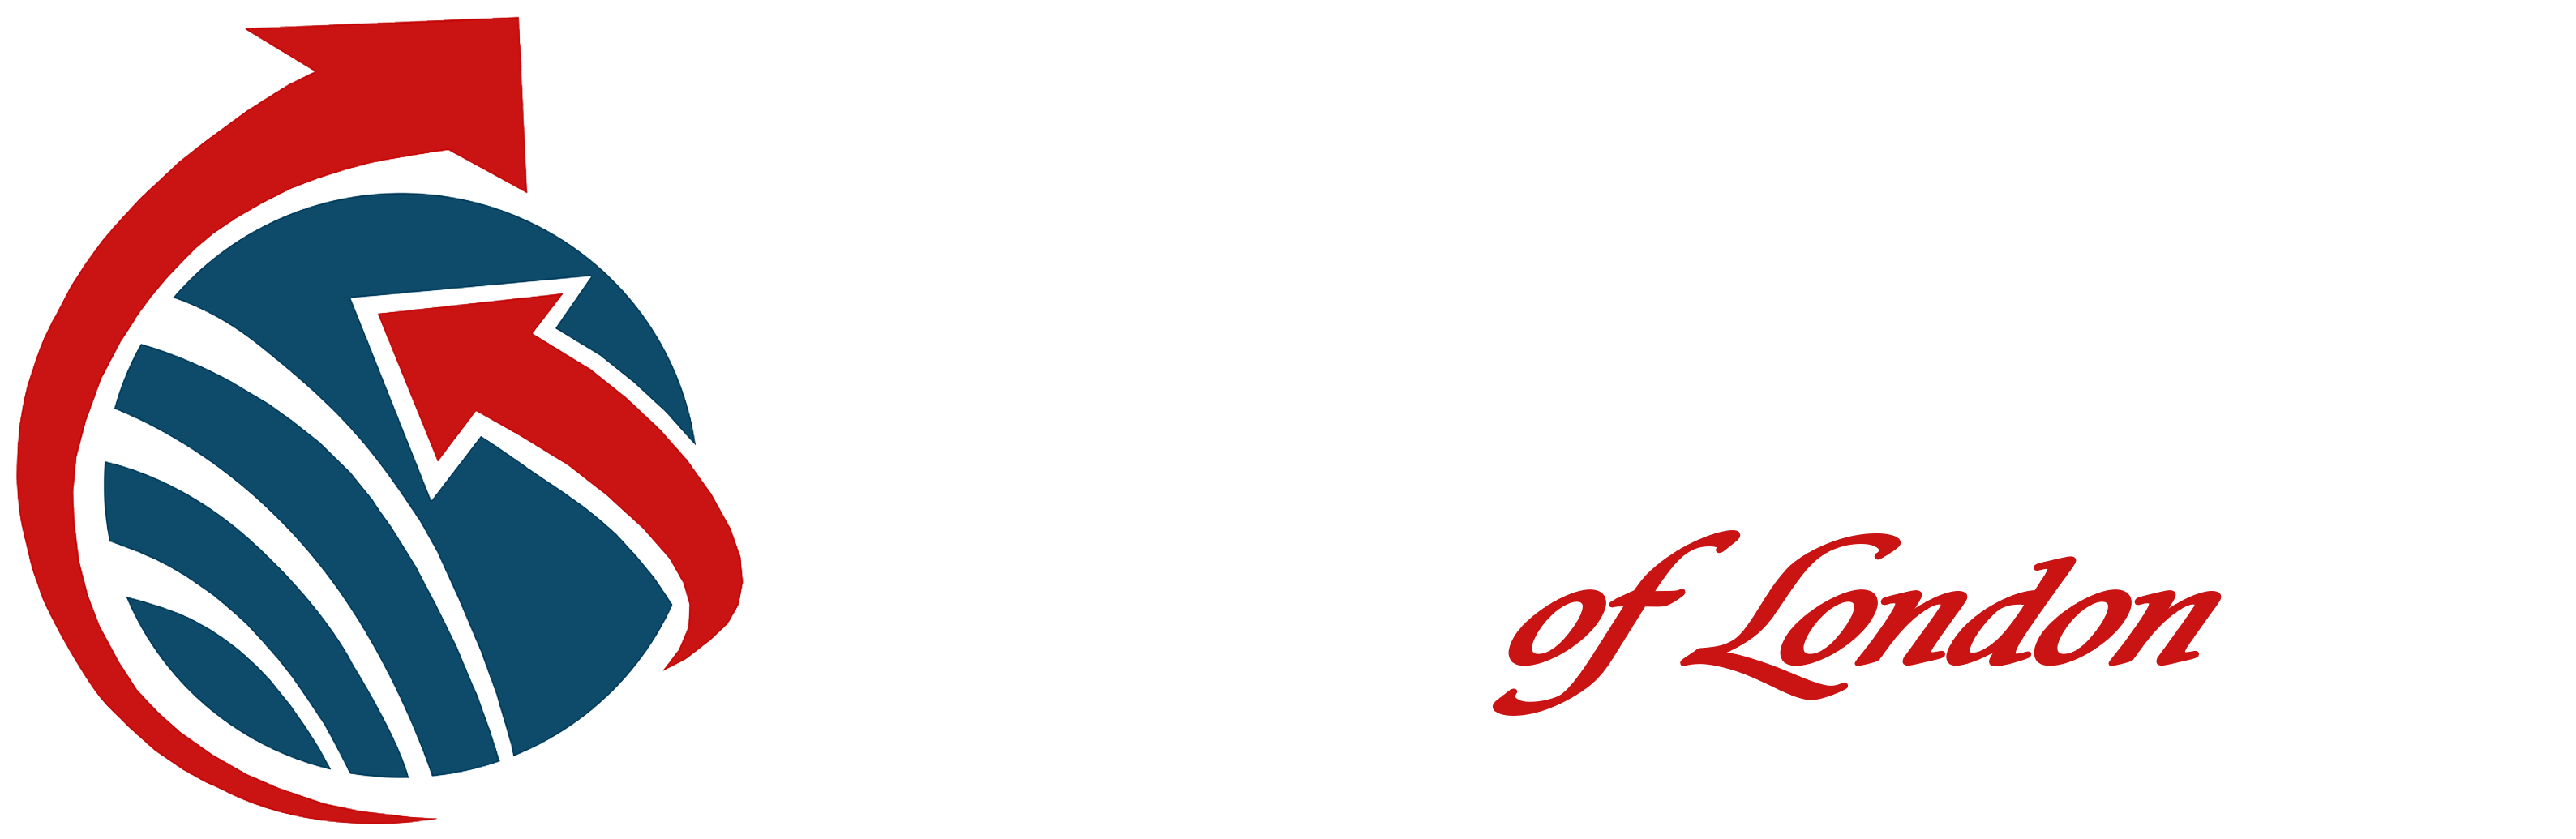 Infinity International Services Of London, Ltd 71-75 - Infinity International Services Of London, Ltd 71-75 (3570x1217)